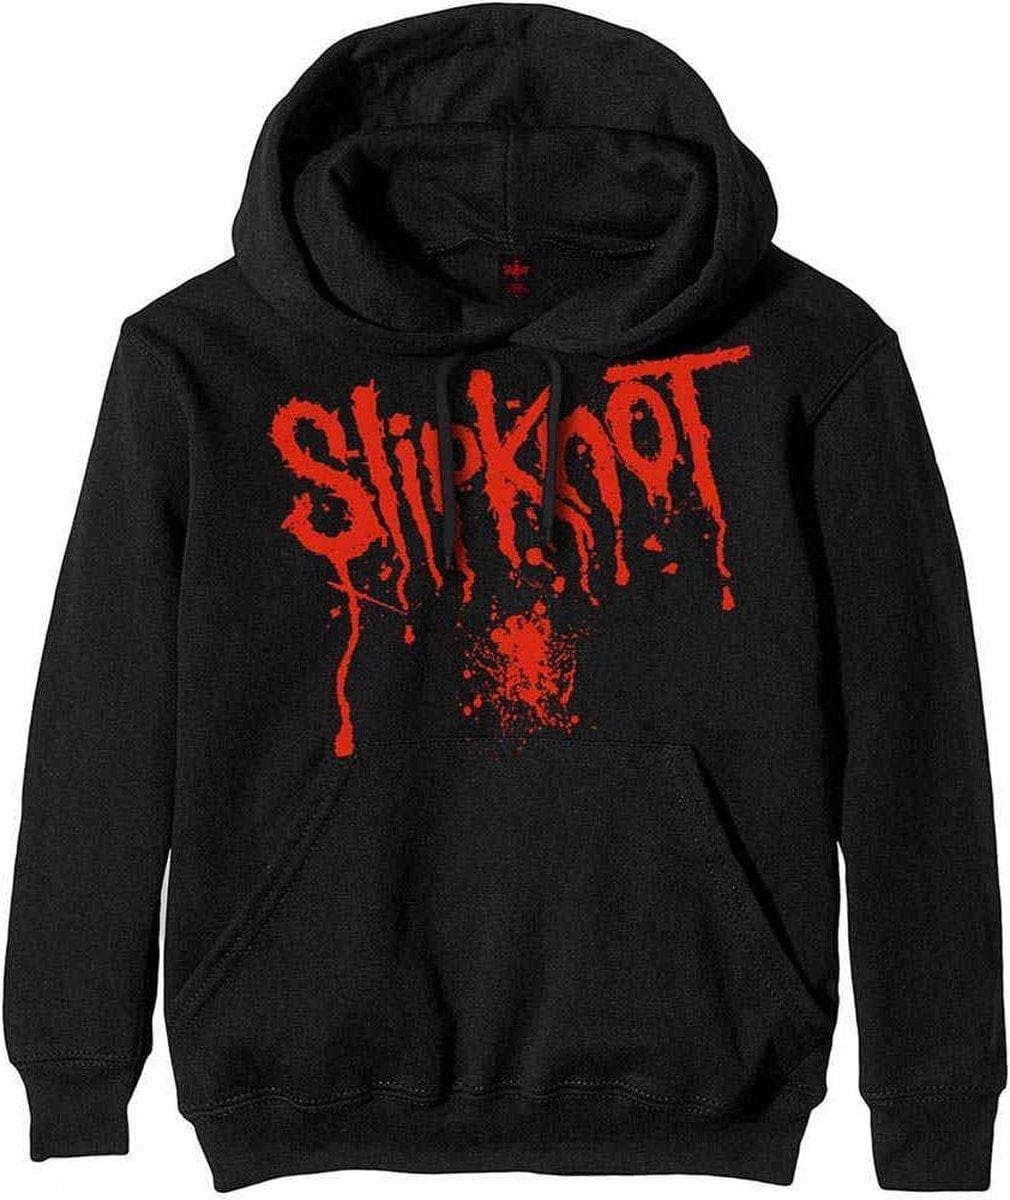 Slipknot - Splatter - Black - XL [Hoodies]